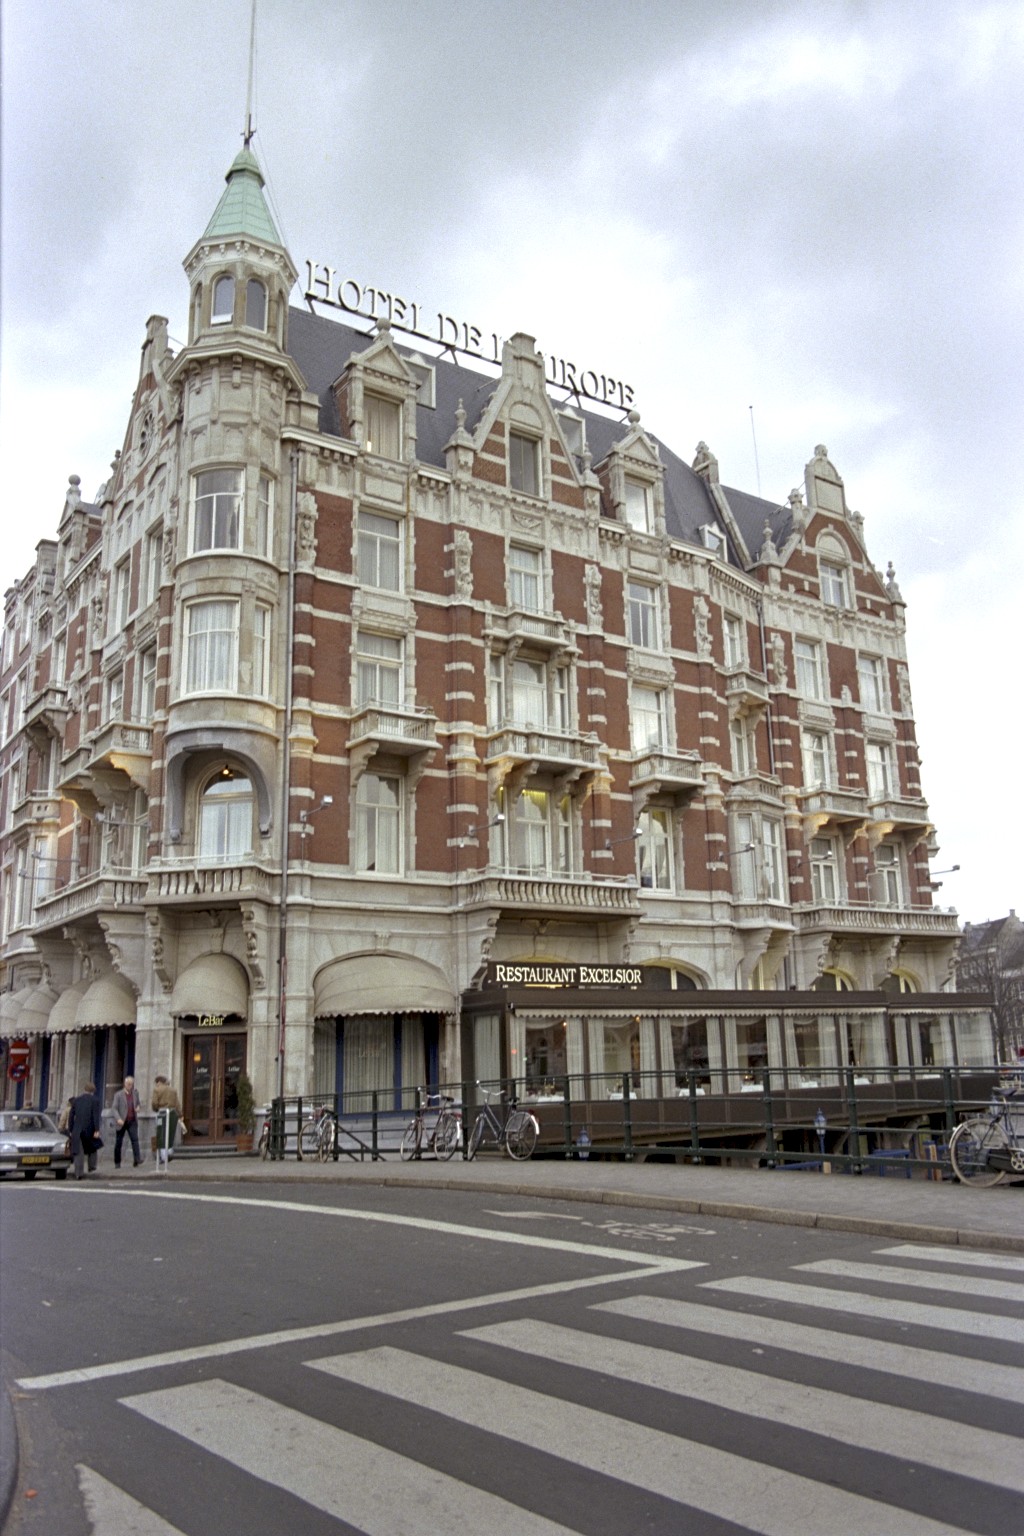 Europe hotel, Amsterdam